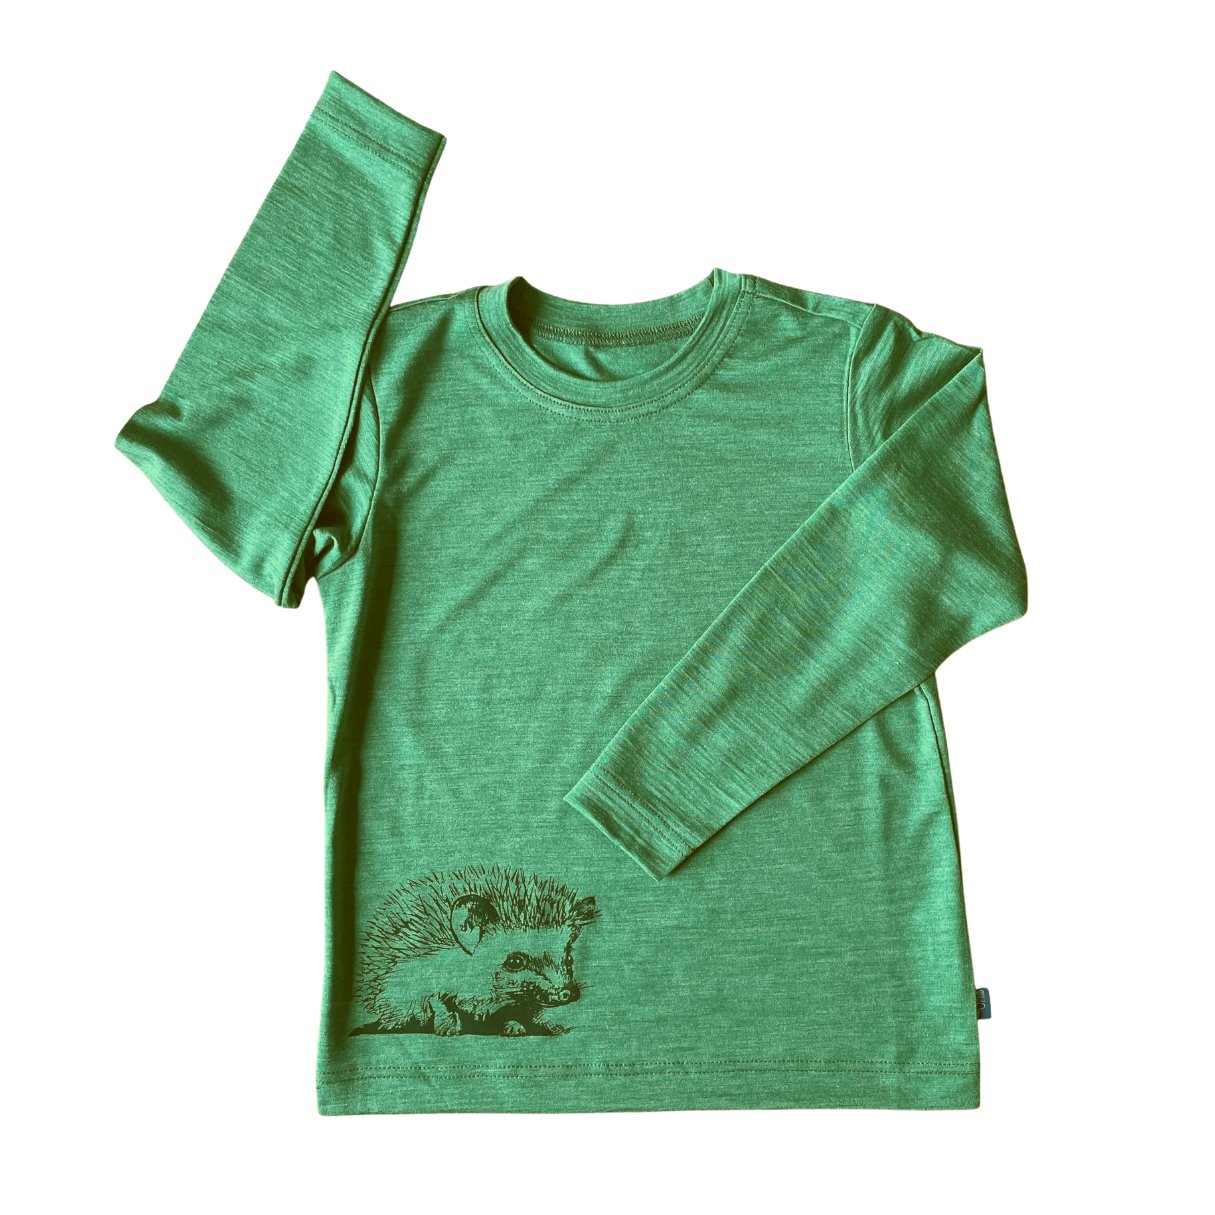 Shirt waldgrün Igel, Merinowolle & Seide (bio/GOTS) - Glückskind - Shirt - 110-116